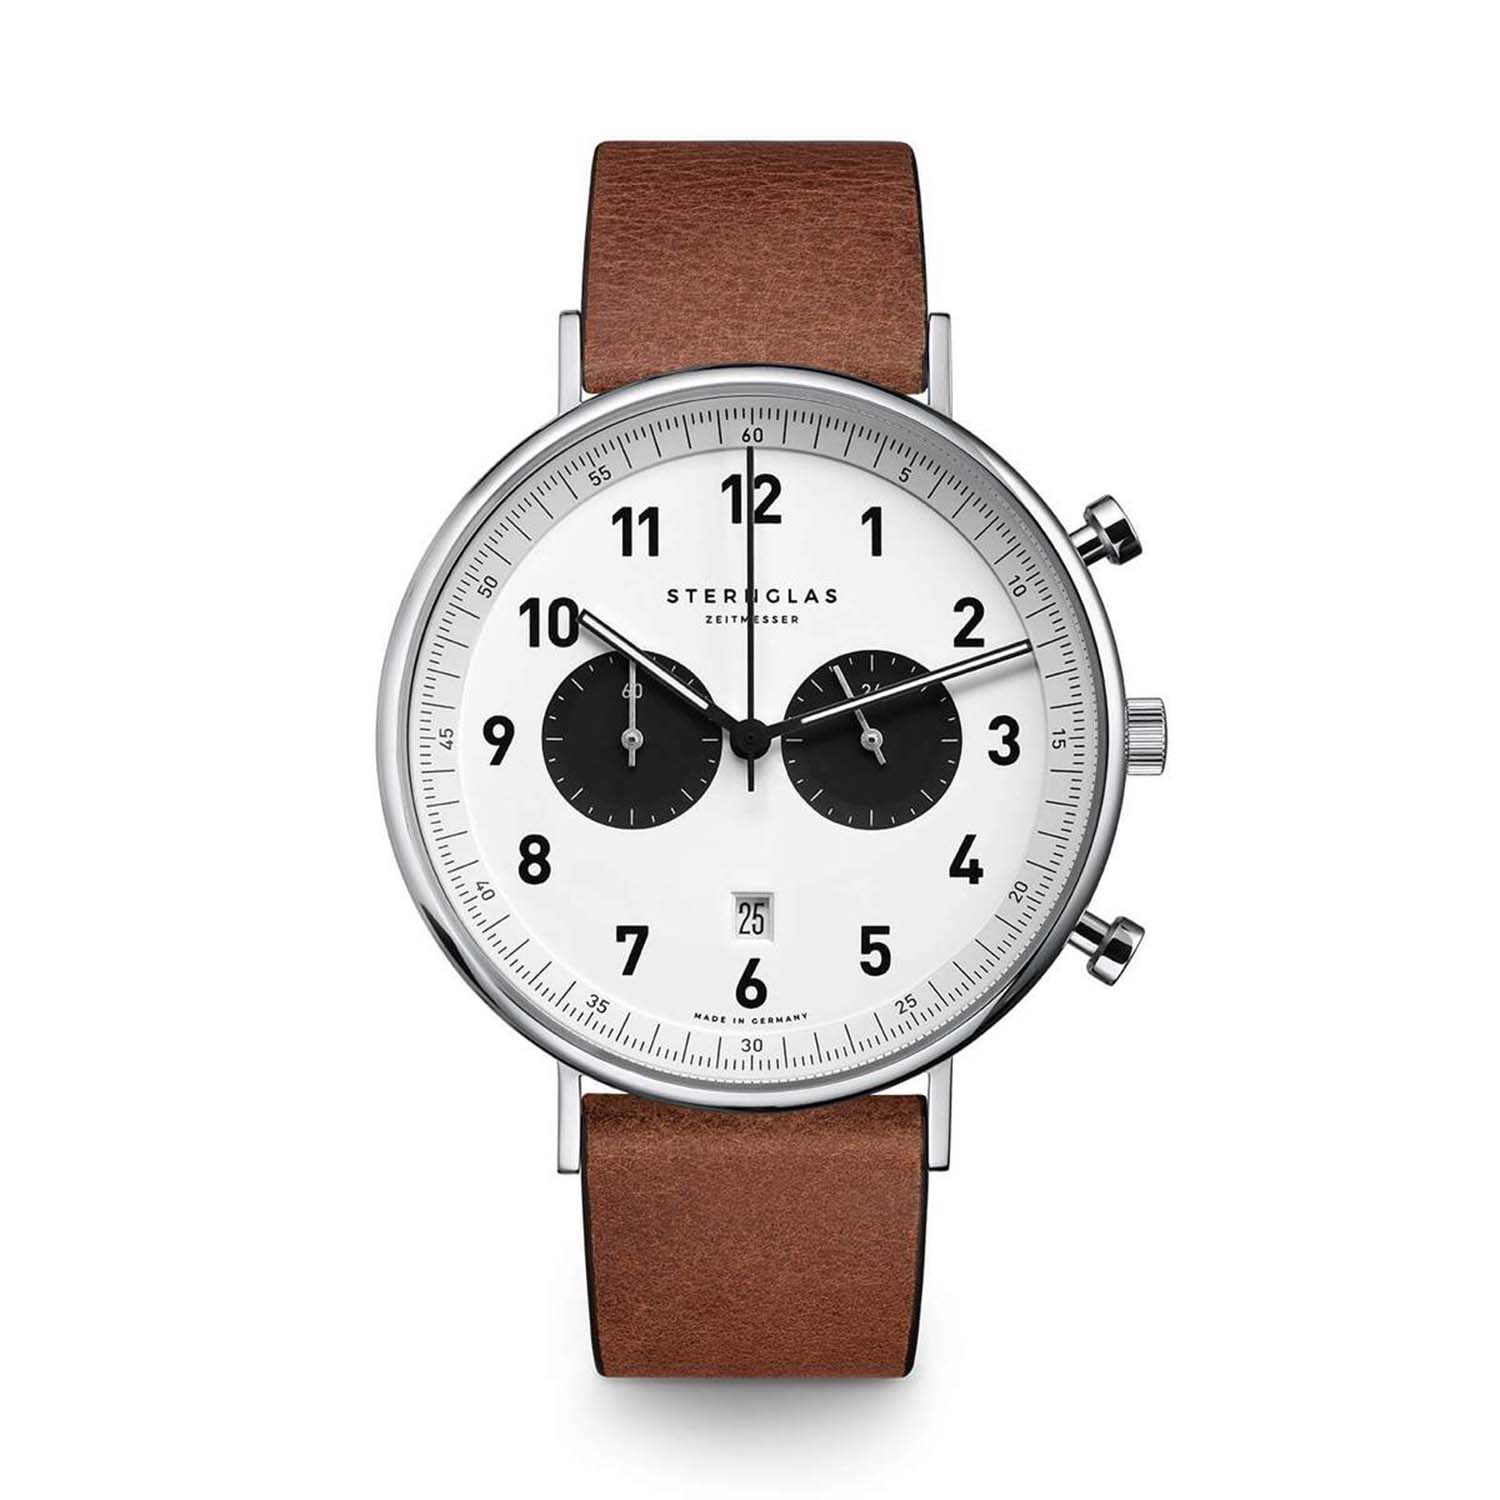 Bauhaus Watches Collection. Made to be Timeless. Bauhaus Movement